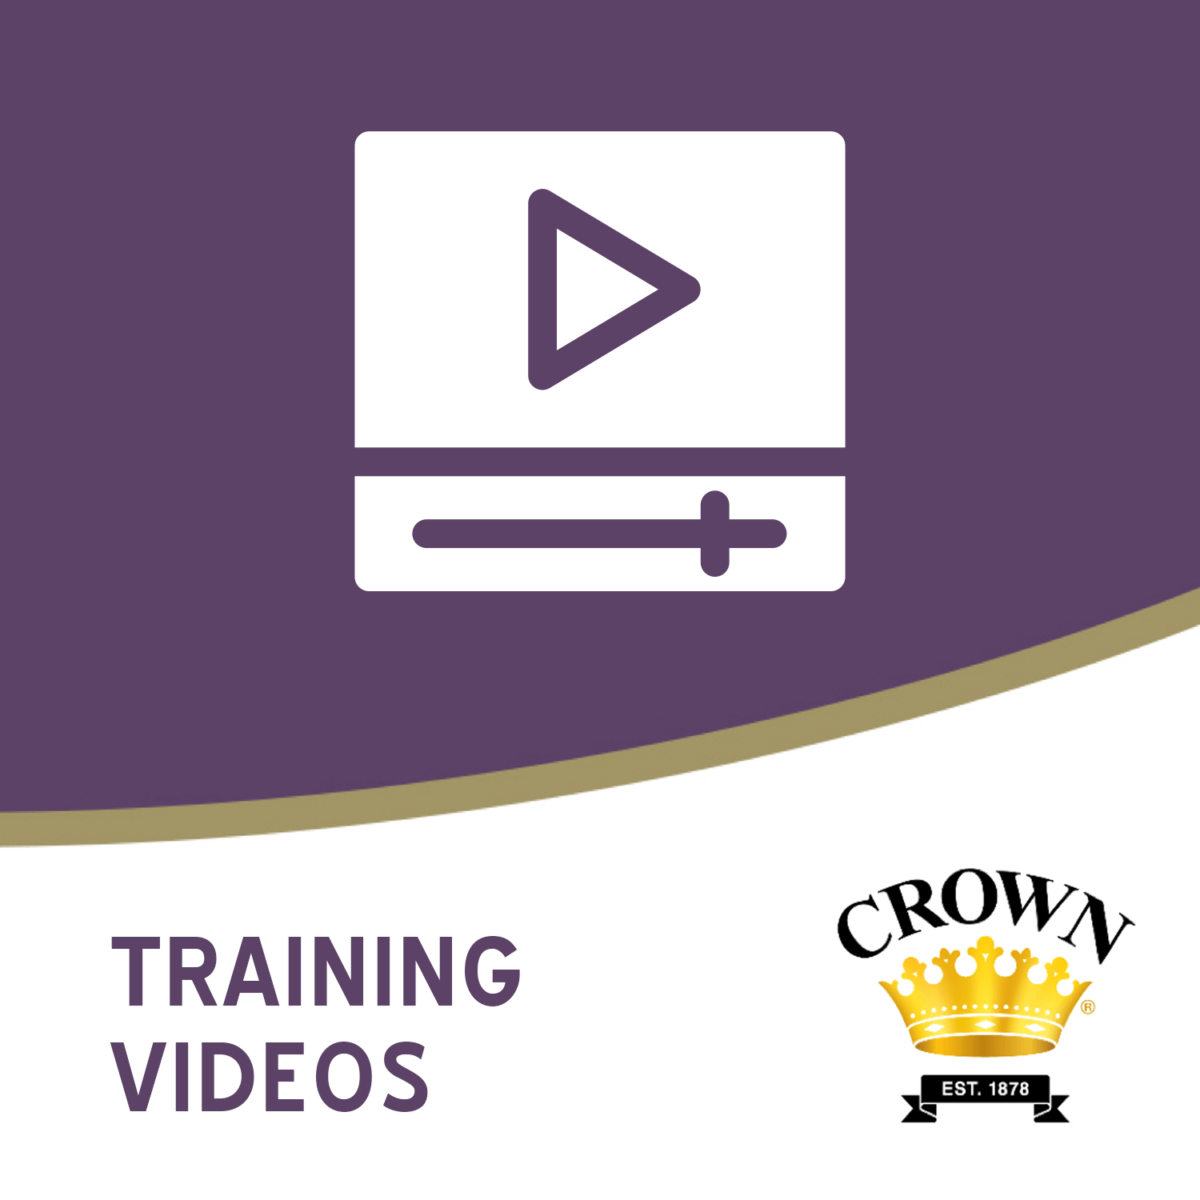 Training videos